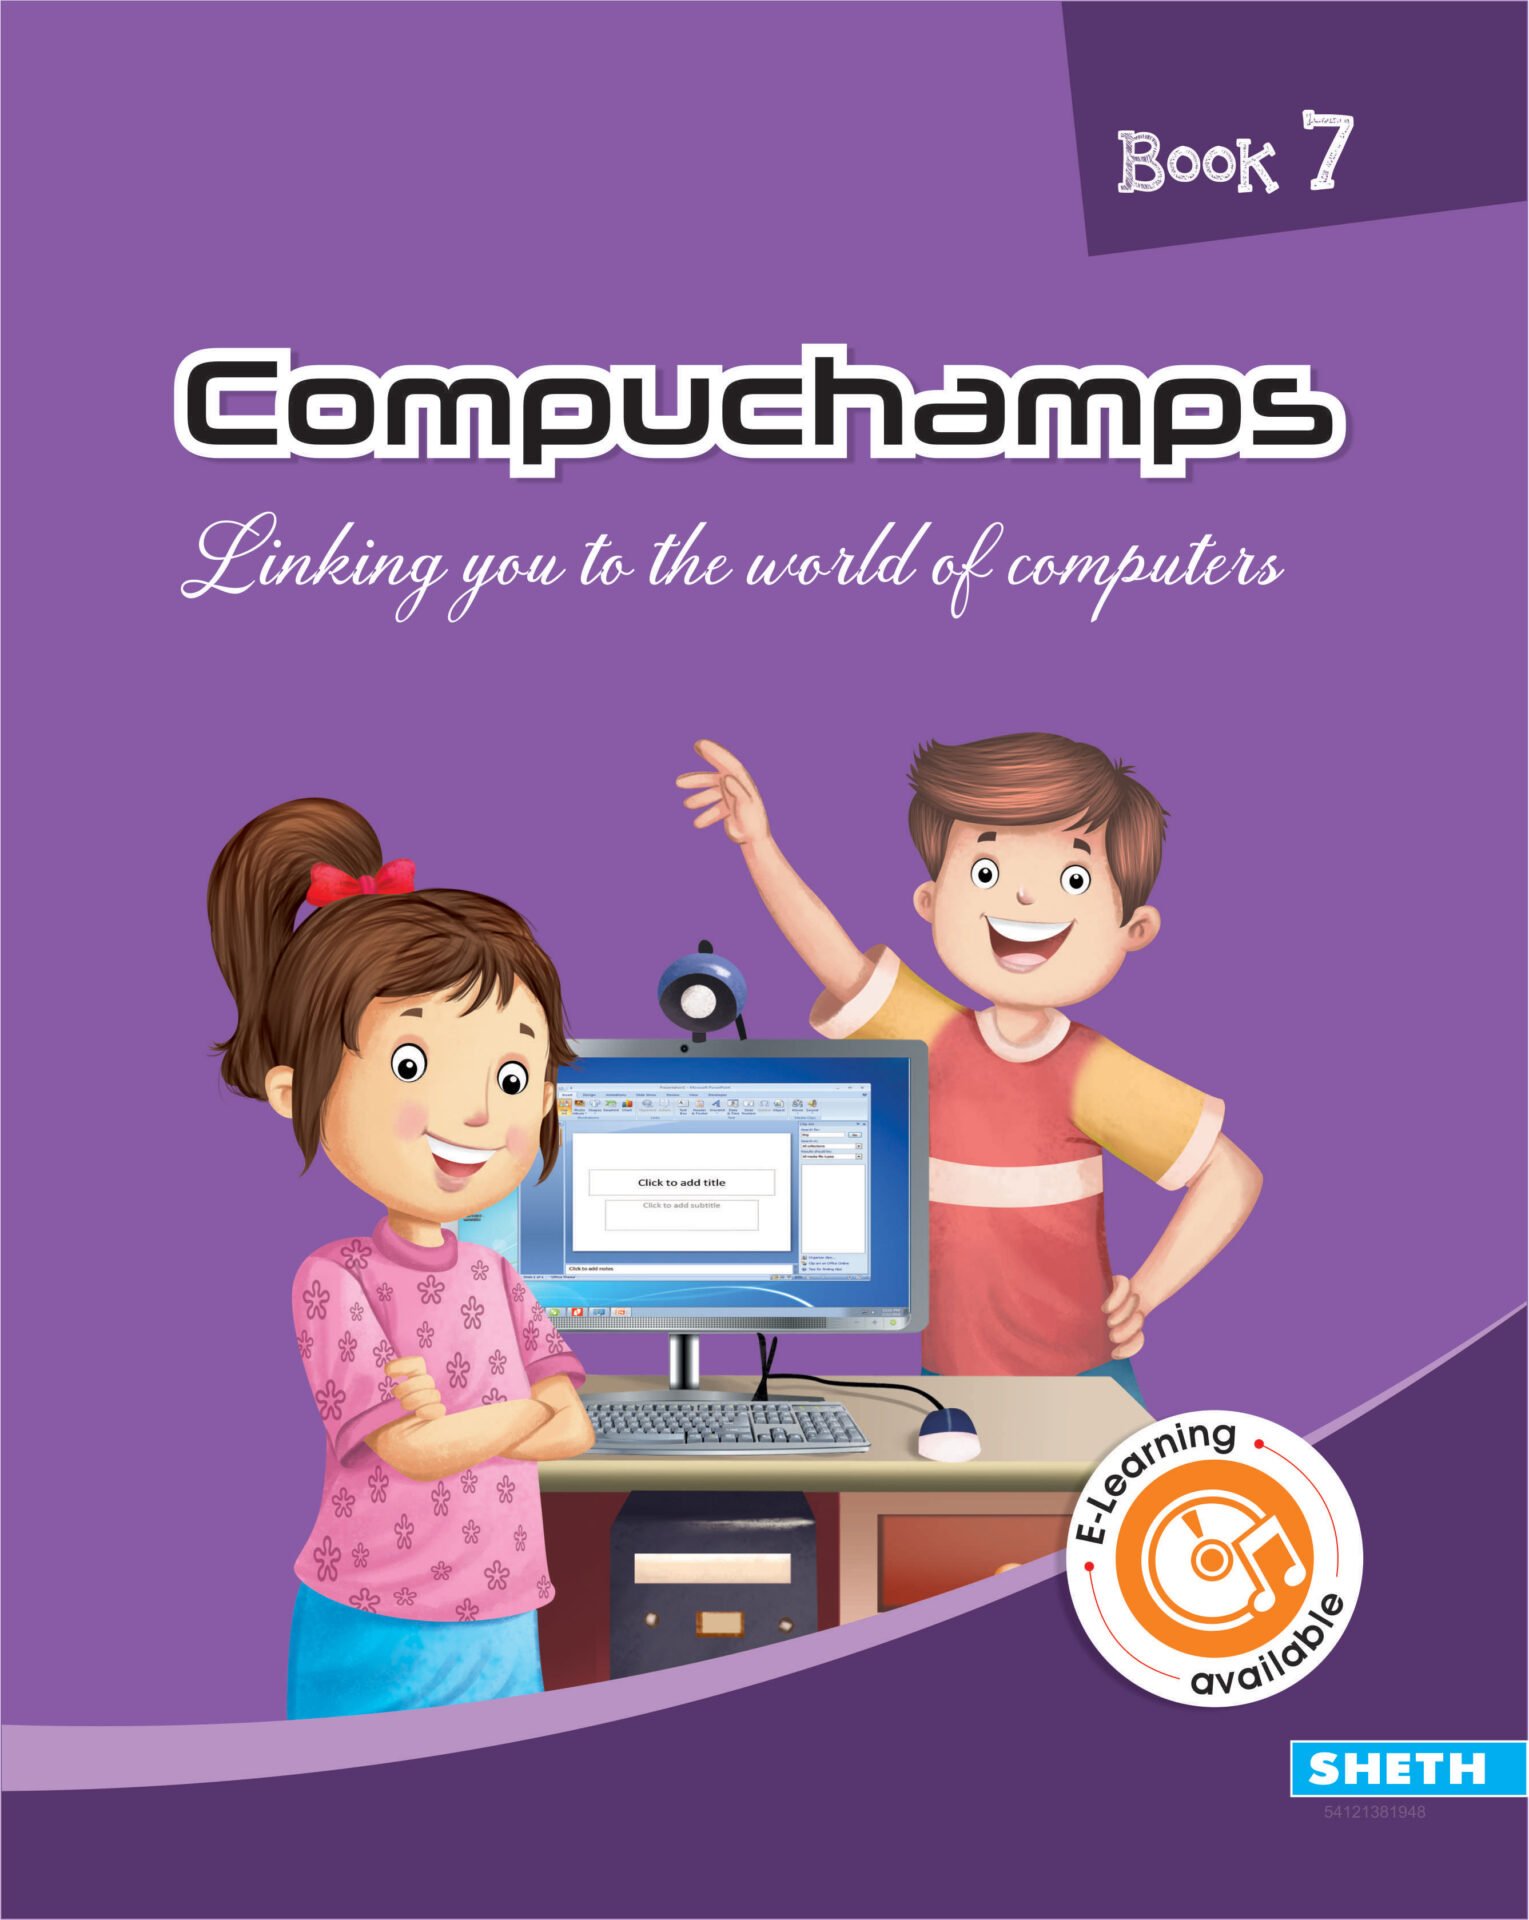 Compuchamps Book 7 1 1